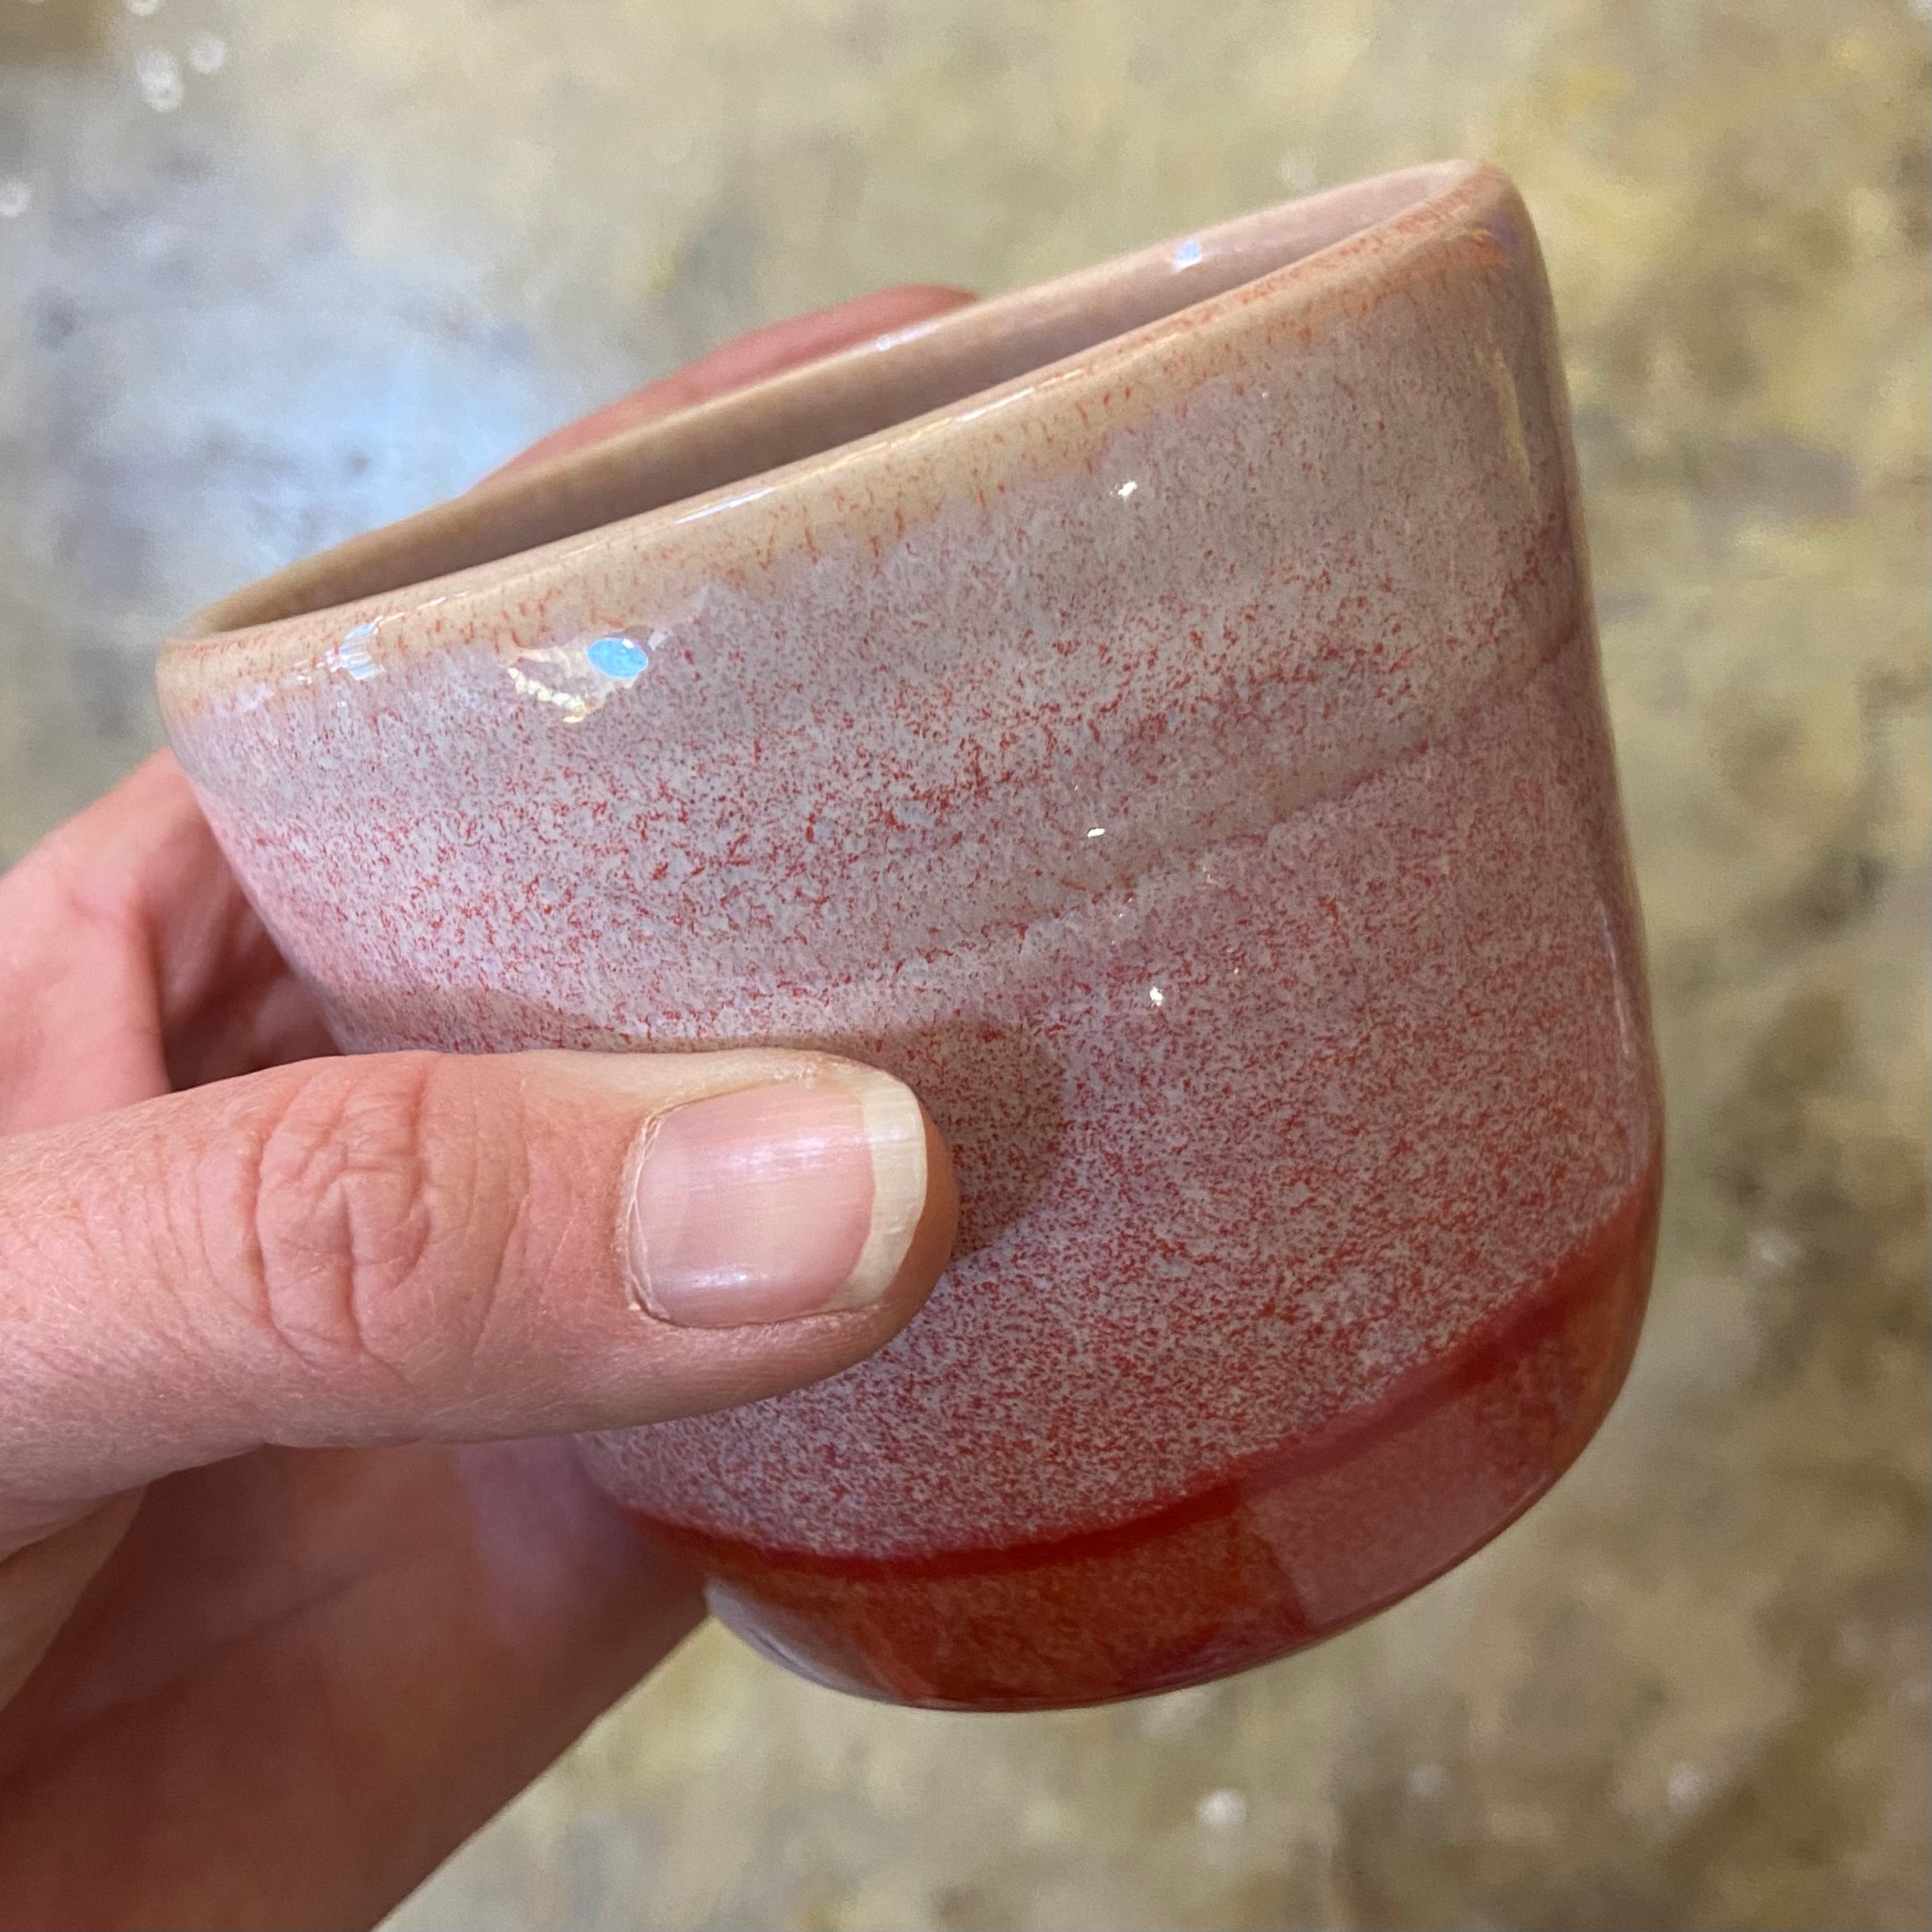 Handmade Pottery Hug Mugs